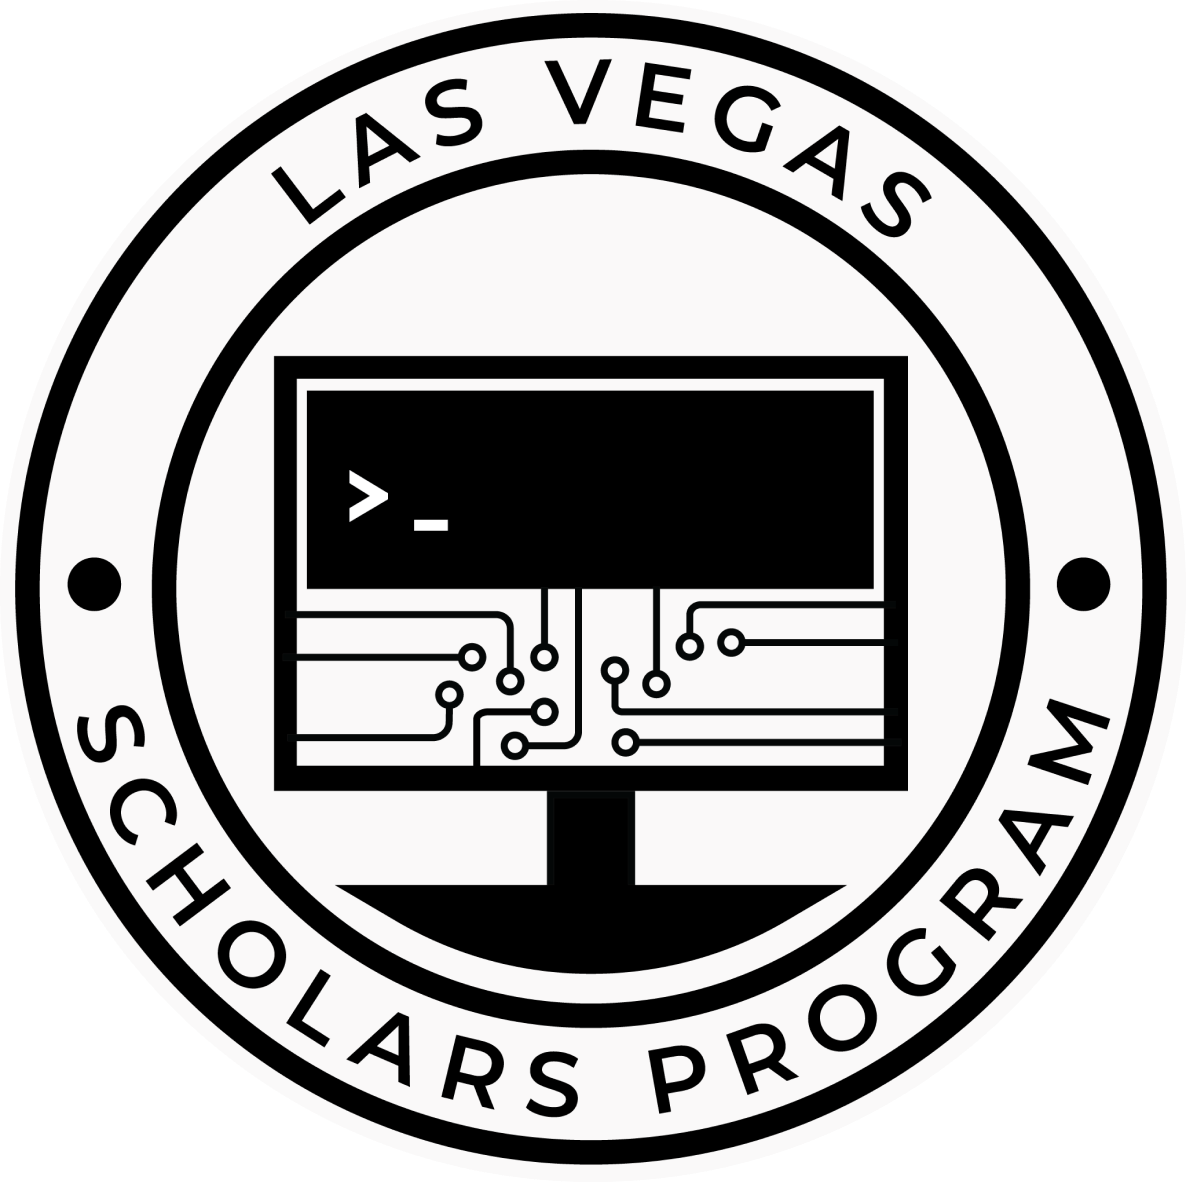 Las Vegas Scholars Program Logo created by Kyla Sannadan